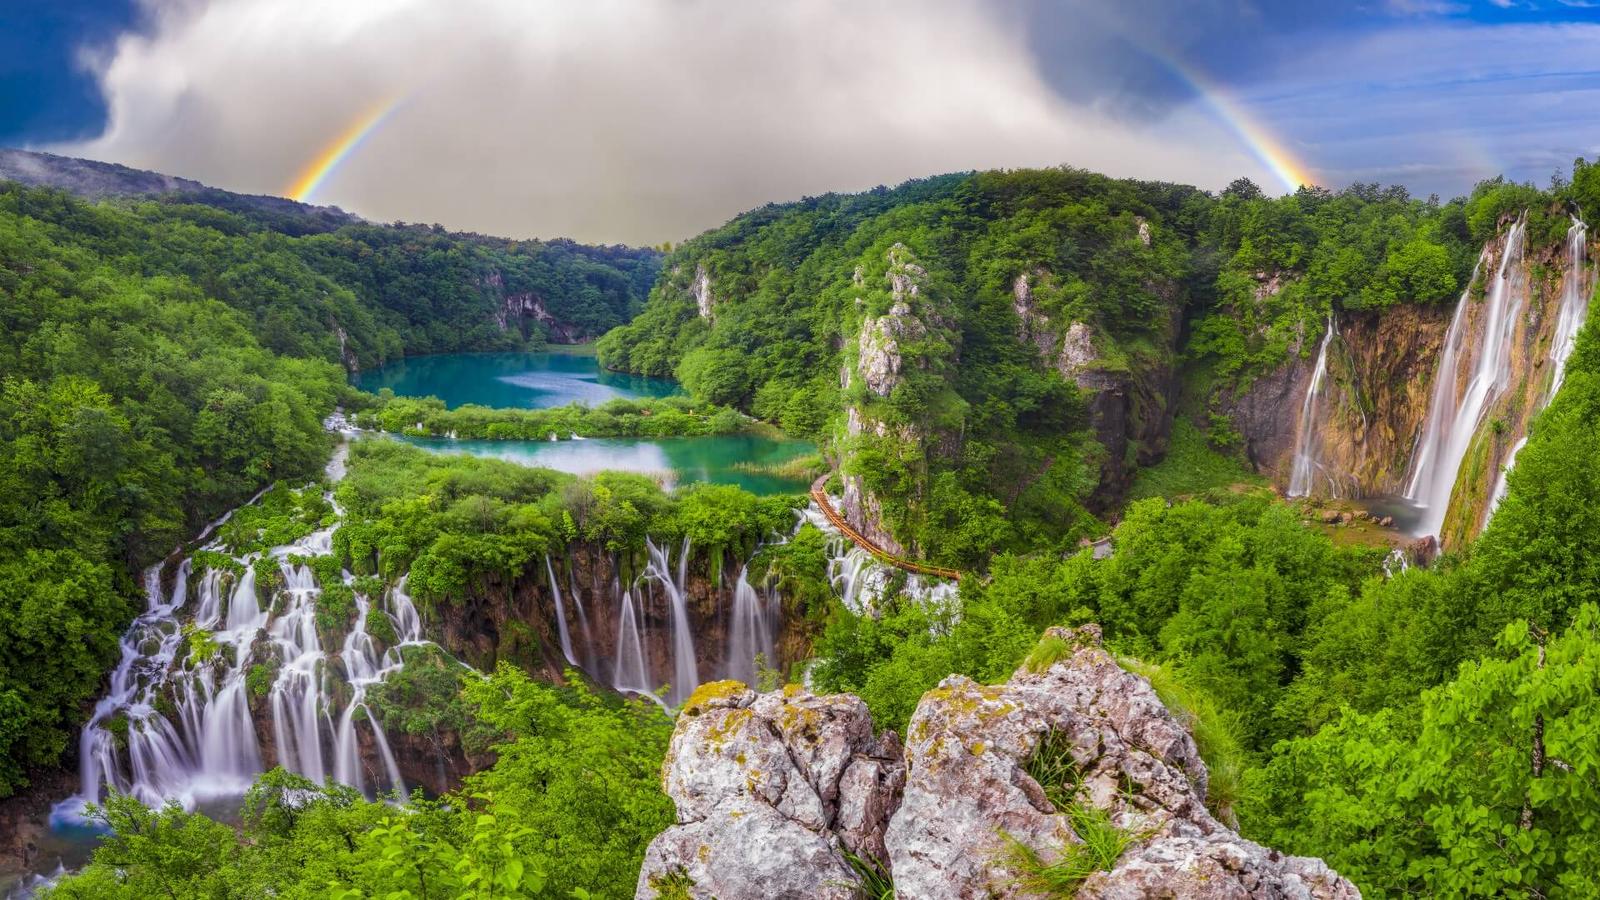 C In Geography Quiz Plitvice Lakes National Park Waterfalls, Croatia